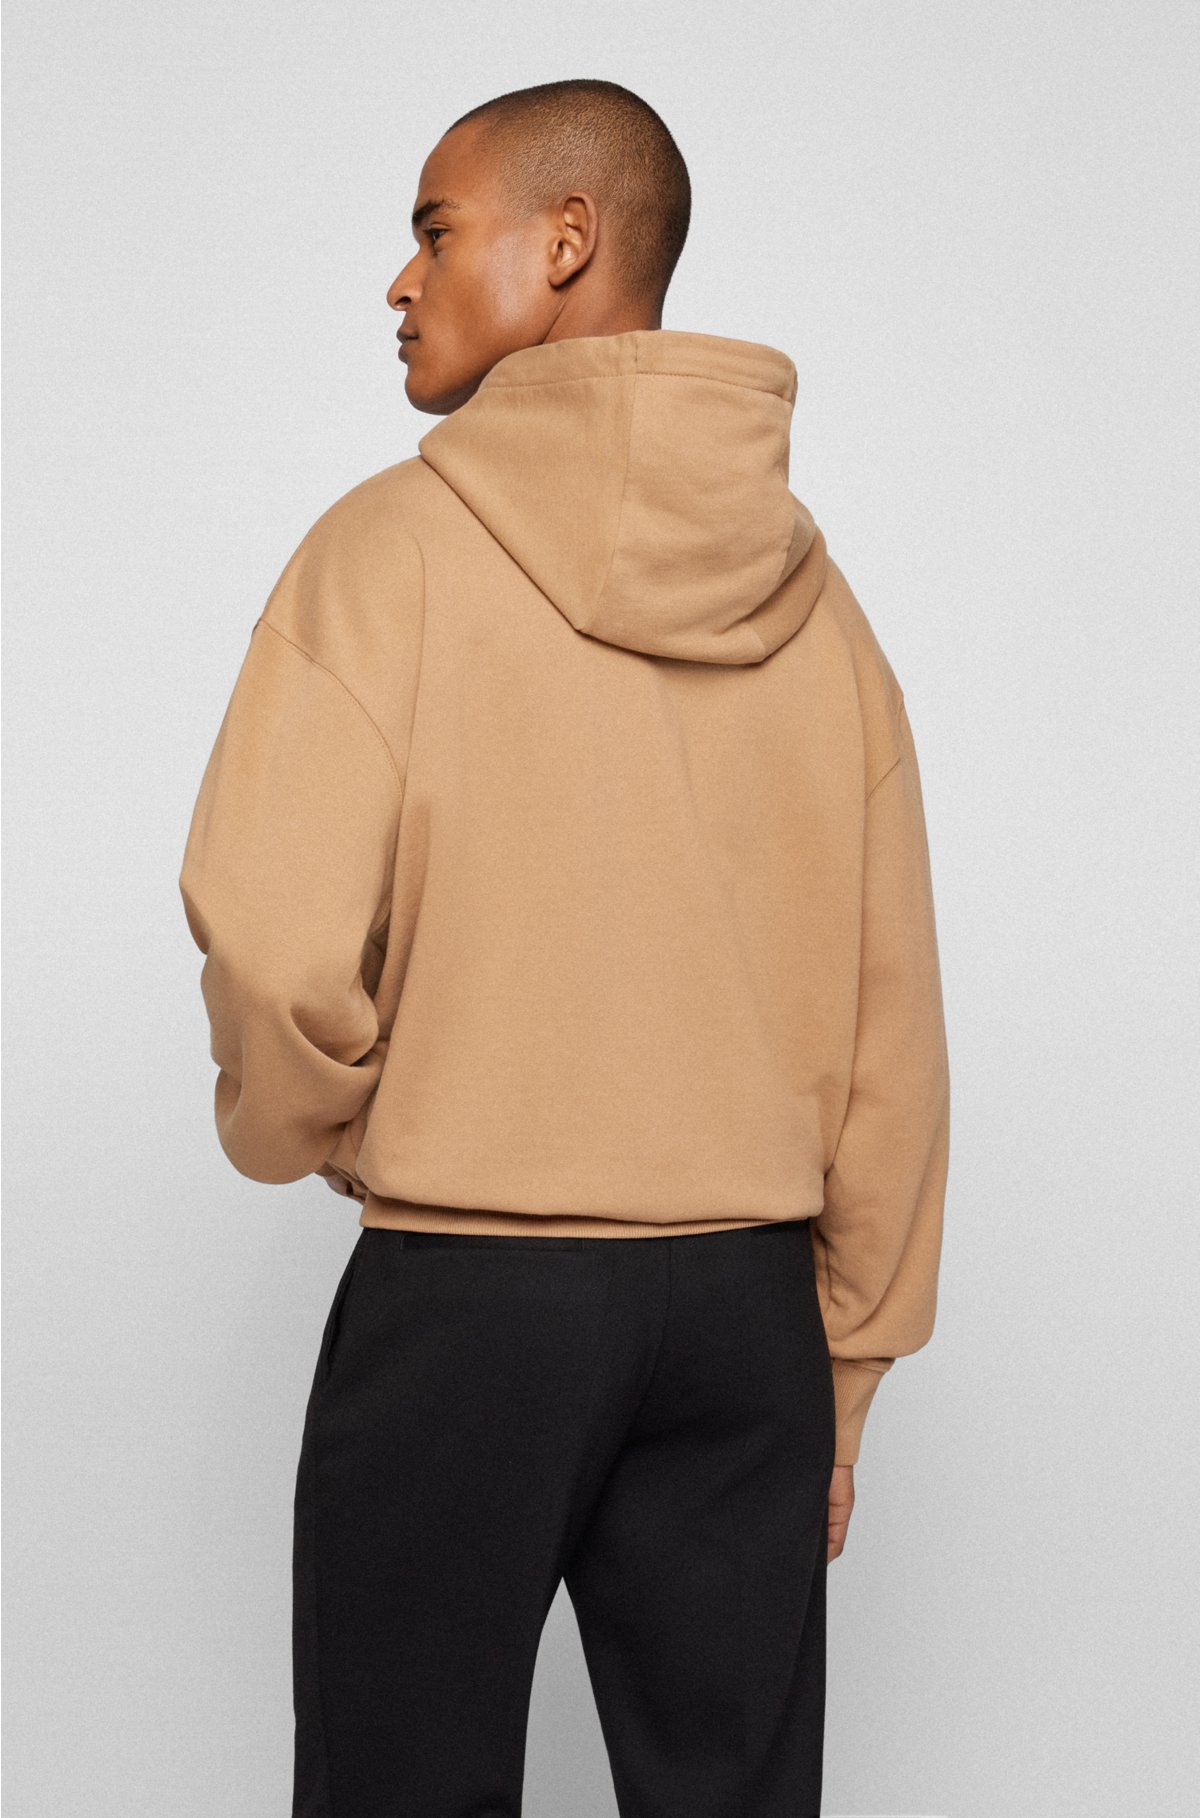 Cotton hooded sweatshirt with contrast logo, Beige